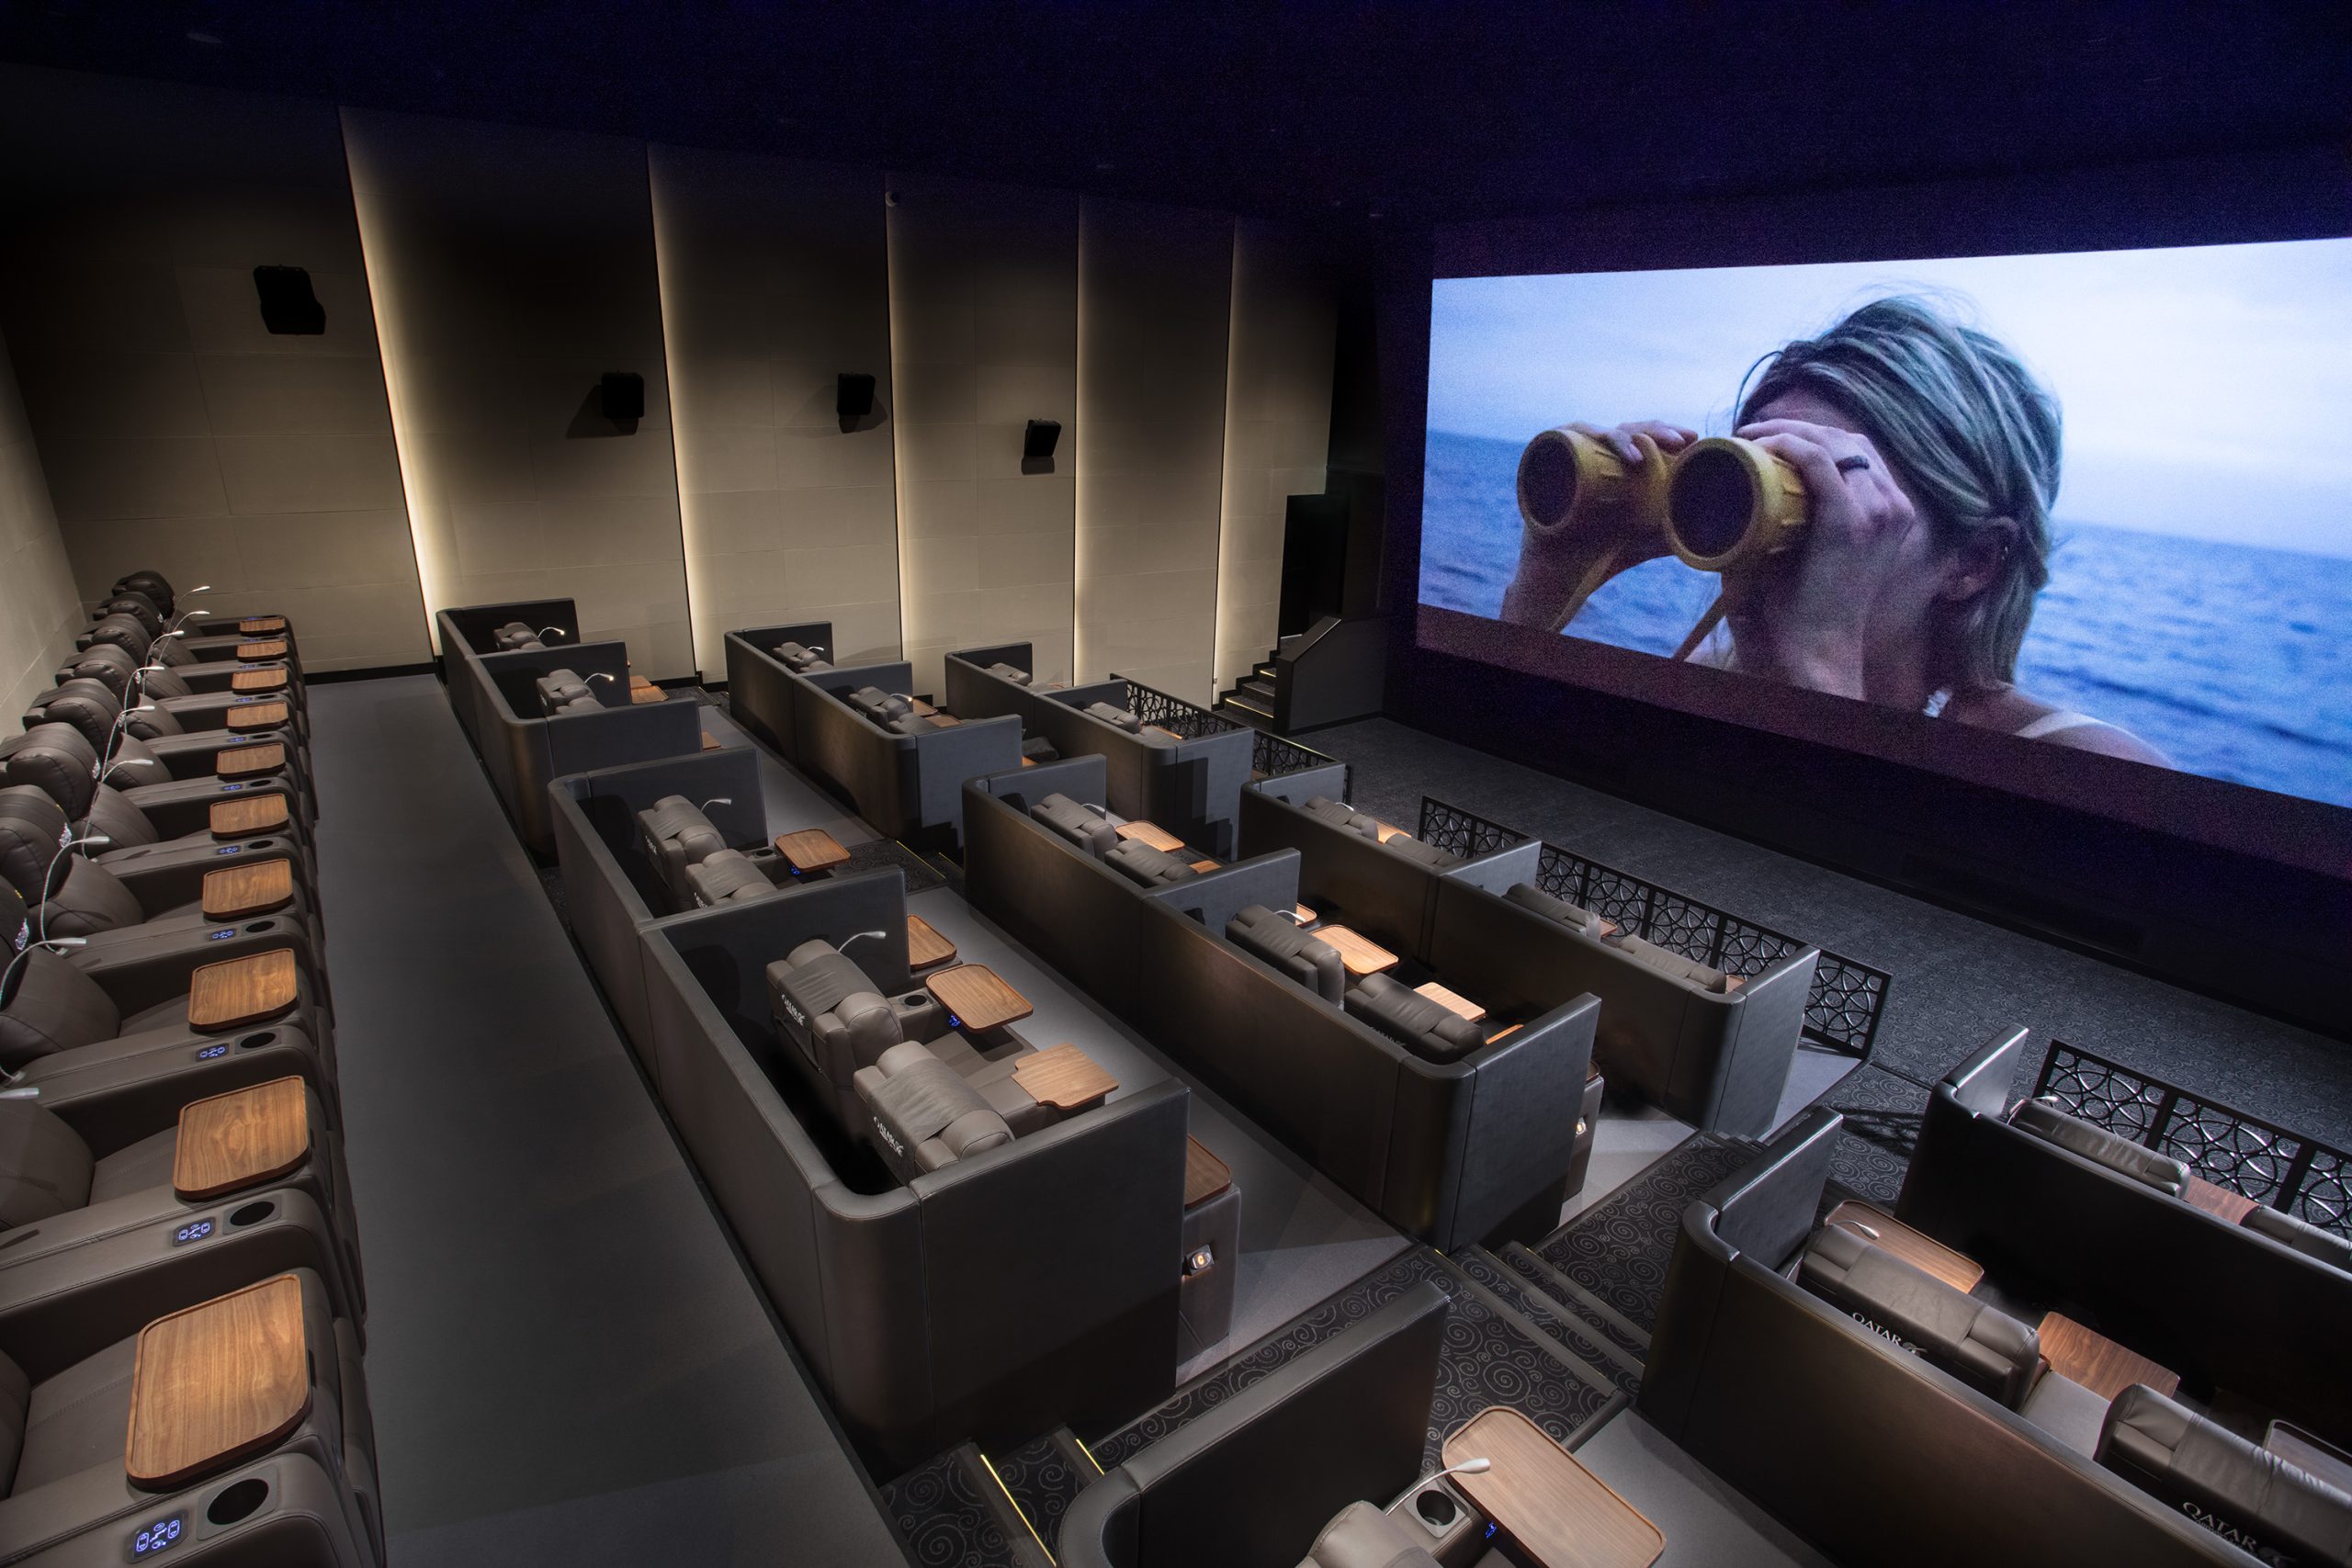 Cinema Experiences in Dubai to Try